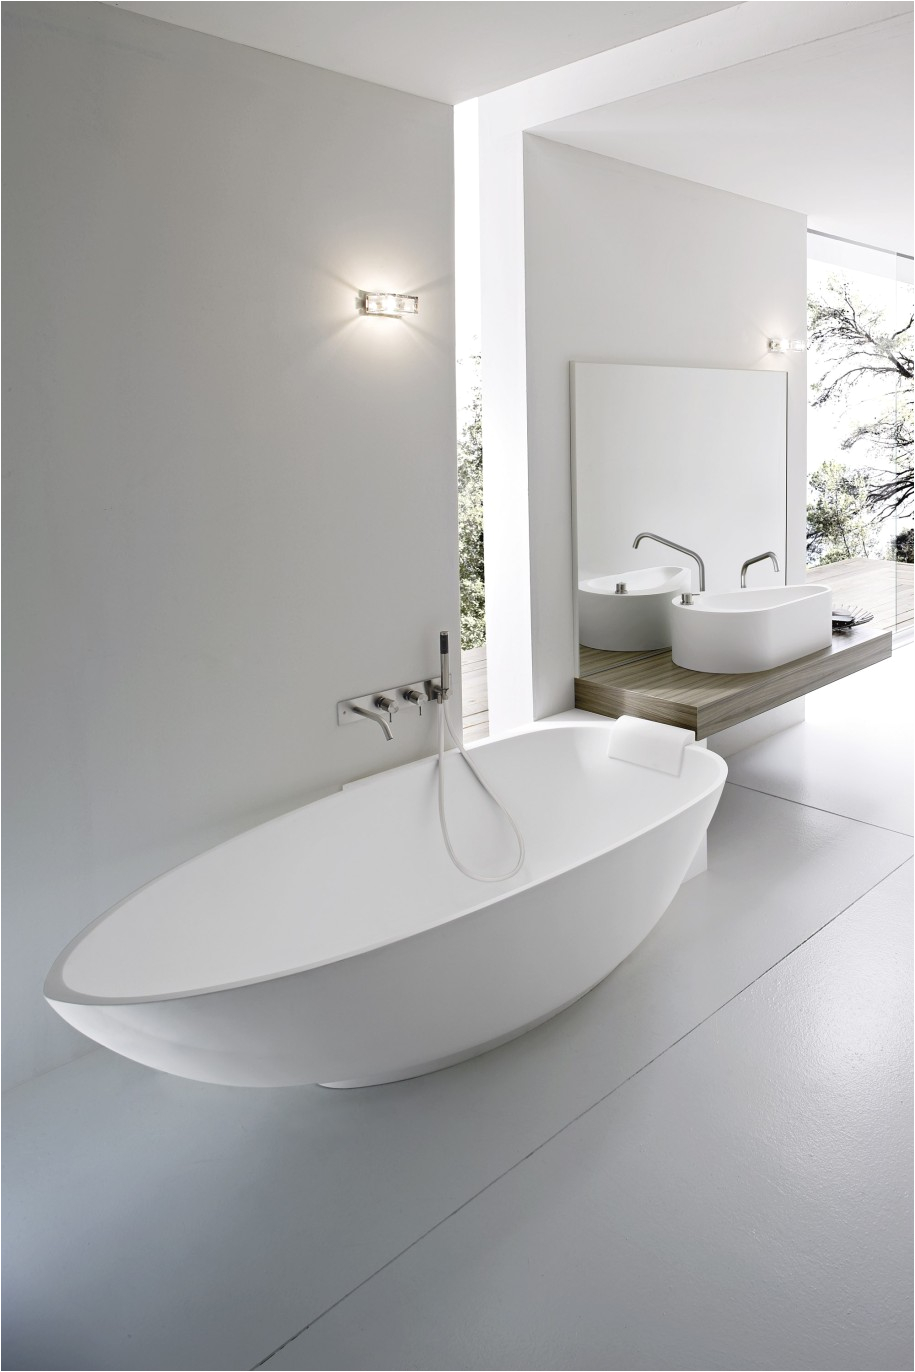 10 most beautiful and stylish bathtubs designs